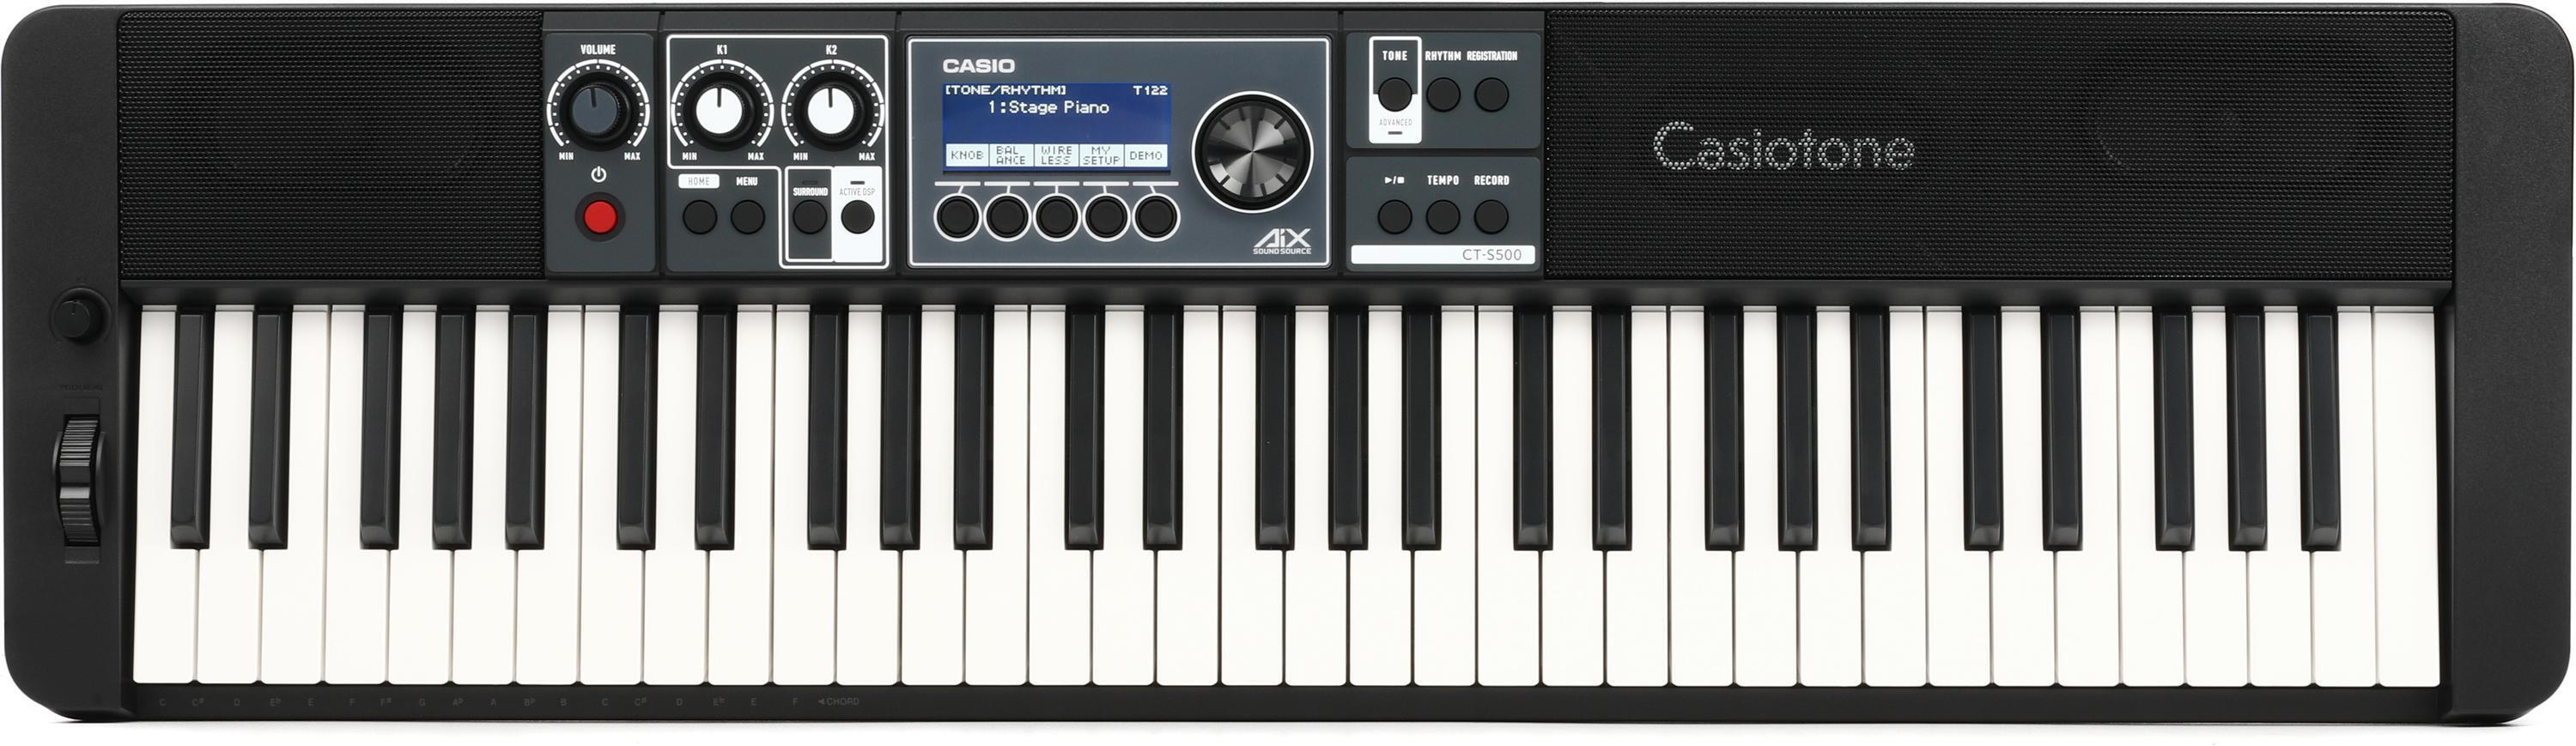 Bundled Item: Casio Casiotone CT-S500 61-key Arranger Keyboard